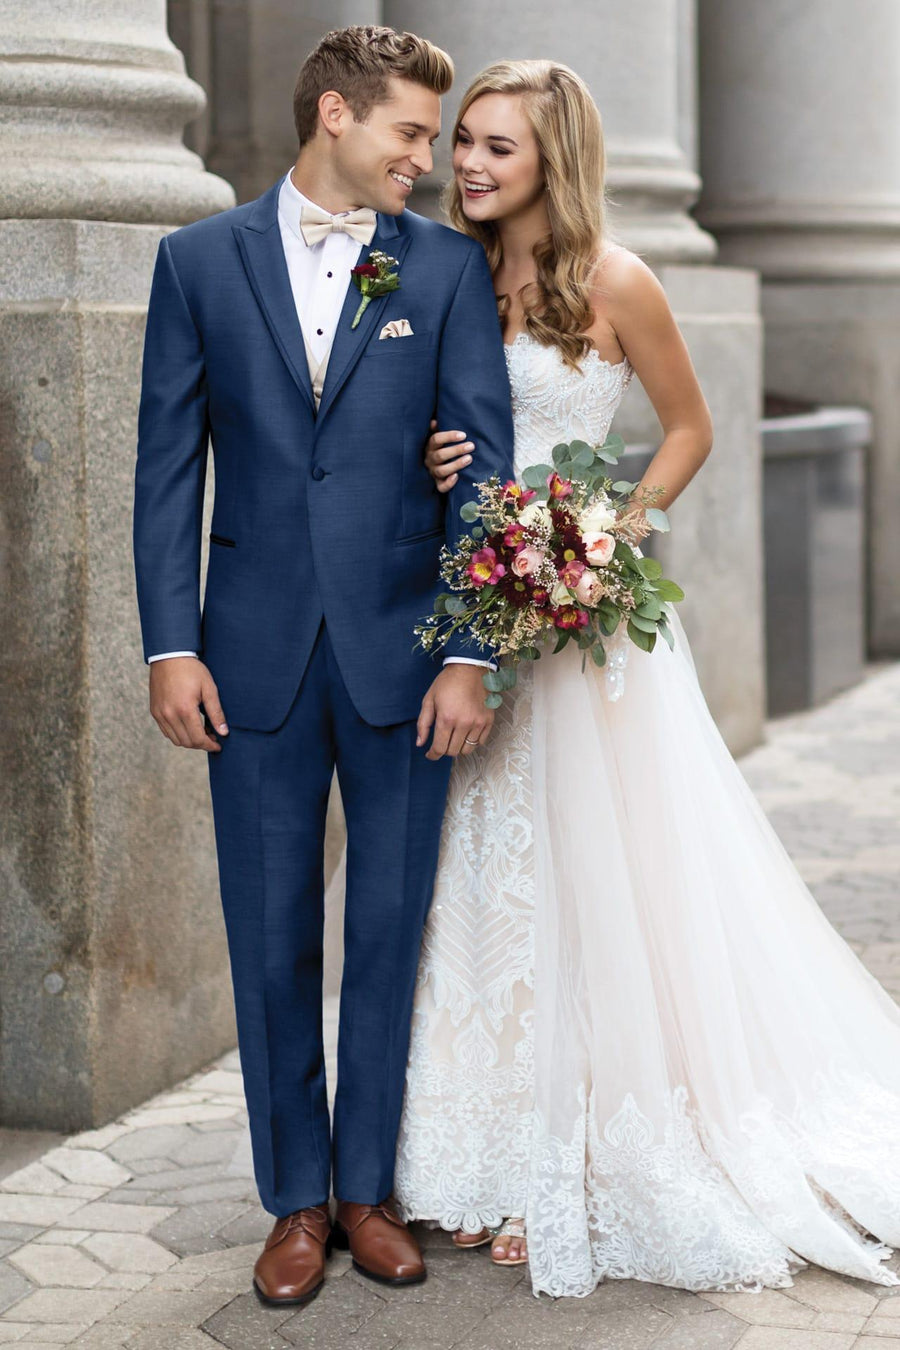 Michael Kors Ultra Slim Blue Performance Wedding Suit Ultra Slim